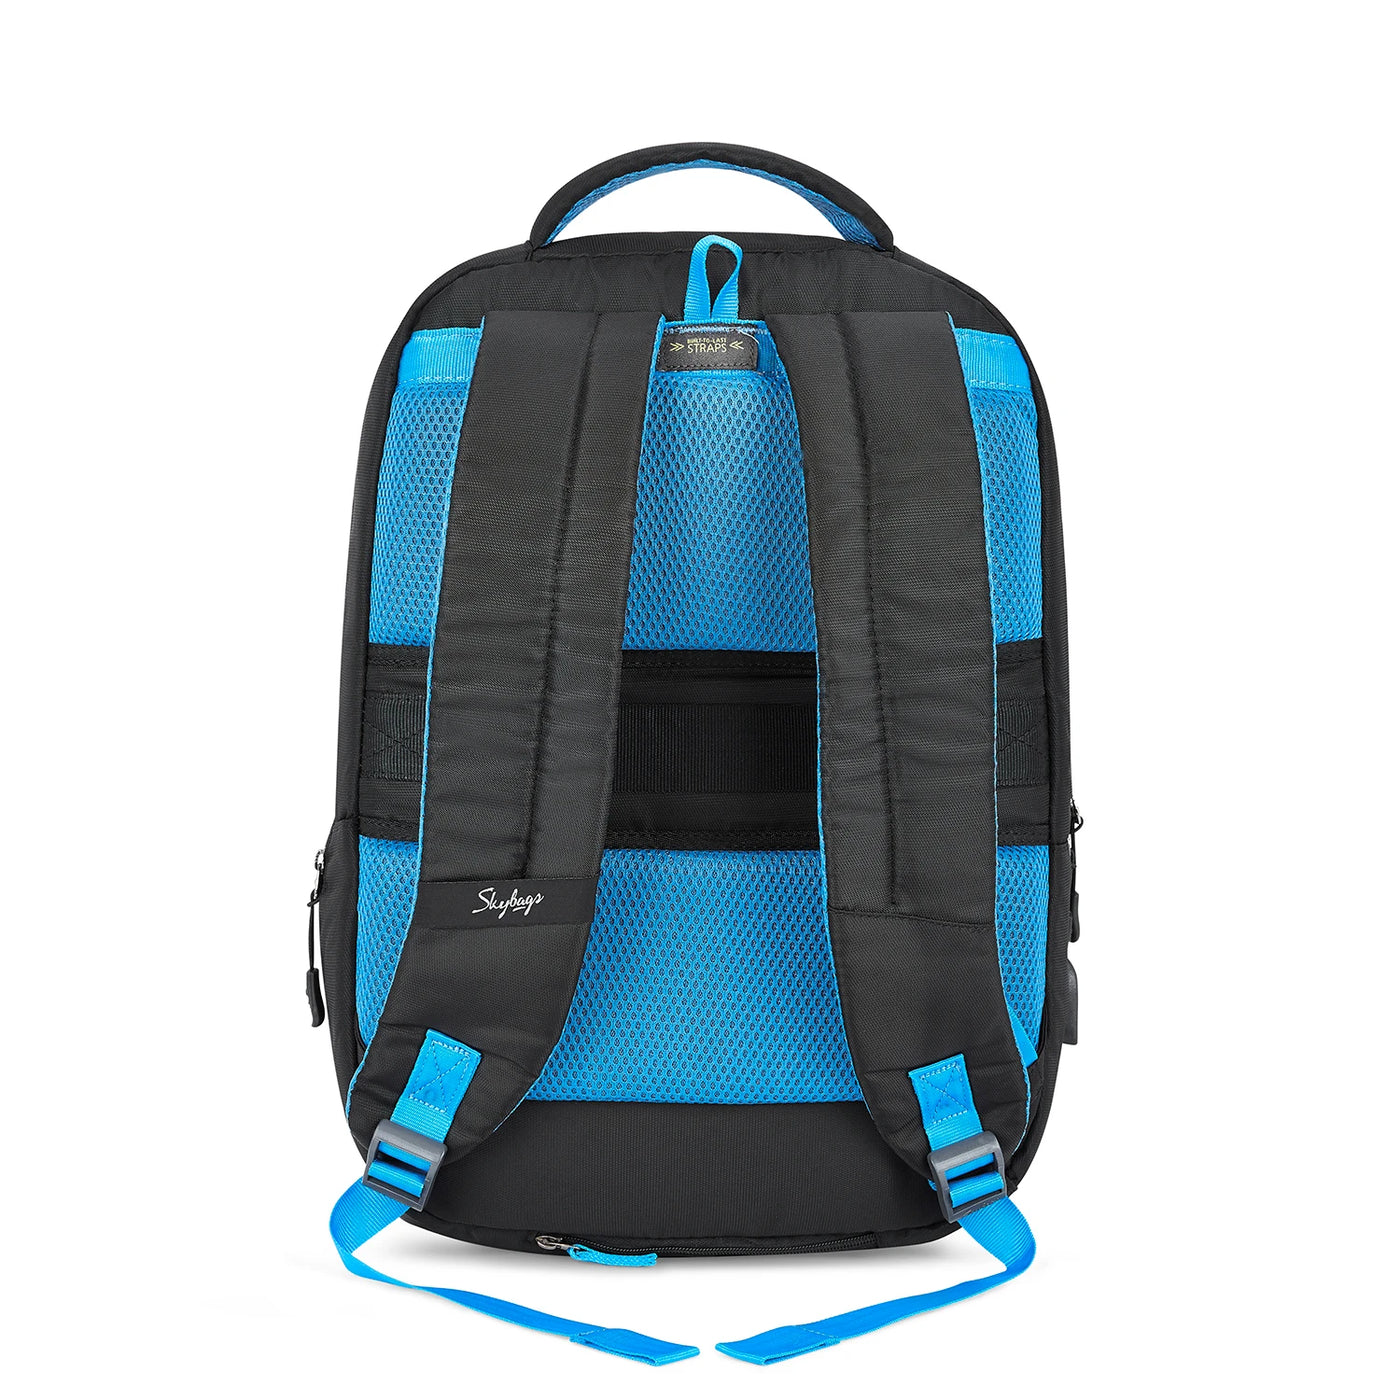 SKYBAGS DRIP PLUS 02 TEAL BLUE 36 L Backpack TEAL BLUE - Price in India |  Flipkart.com